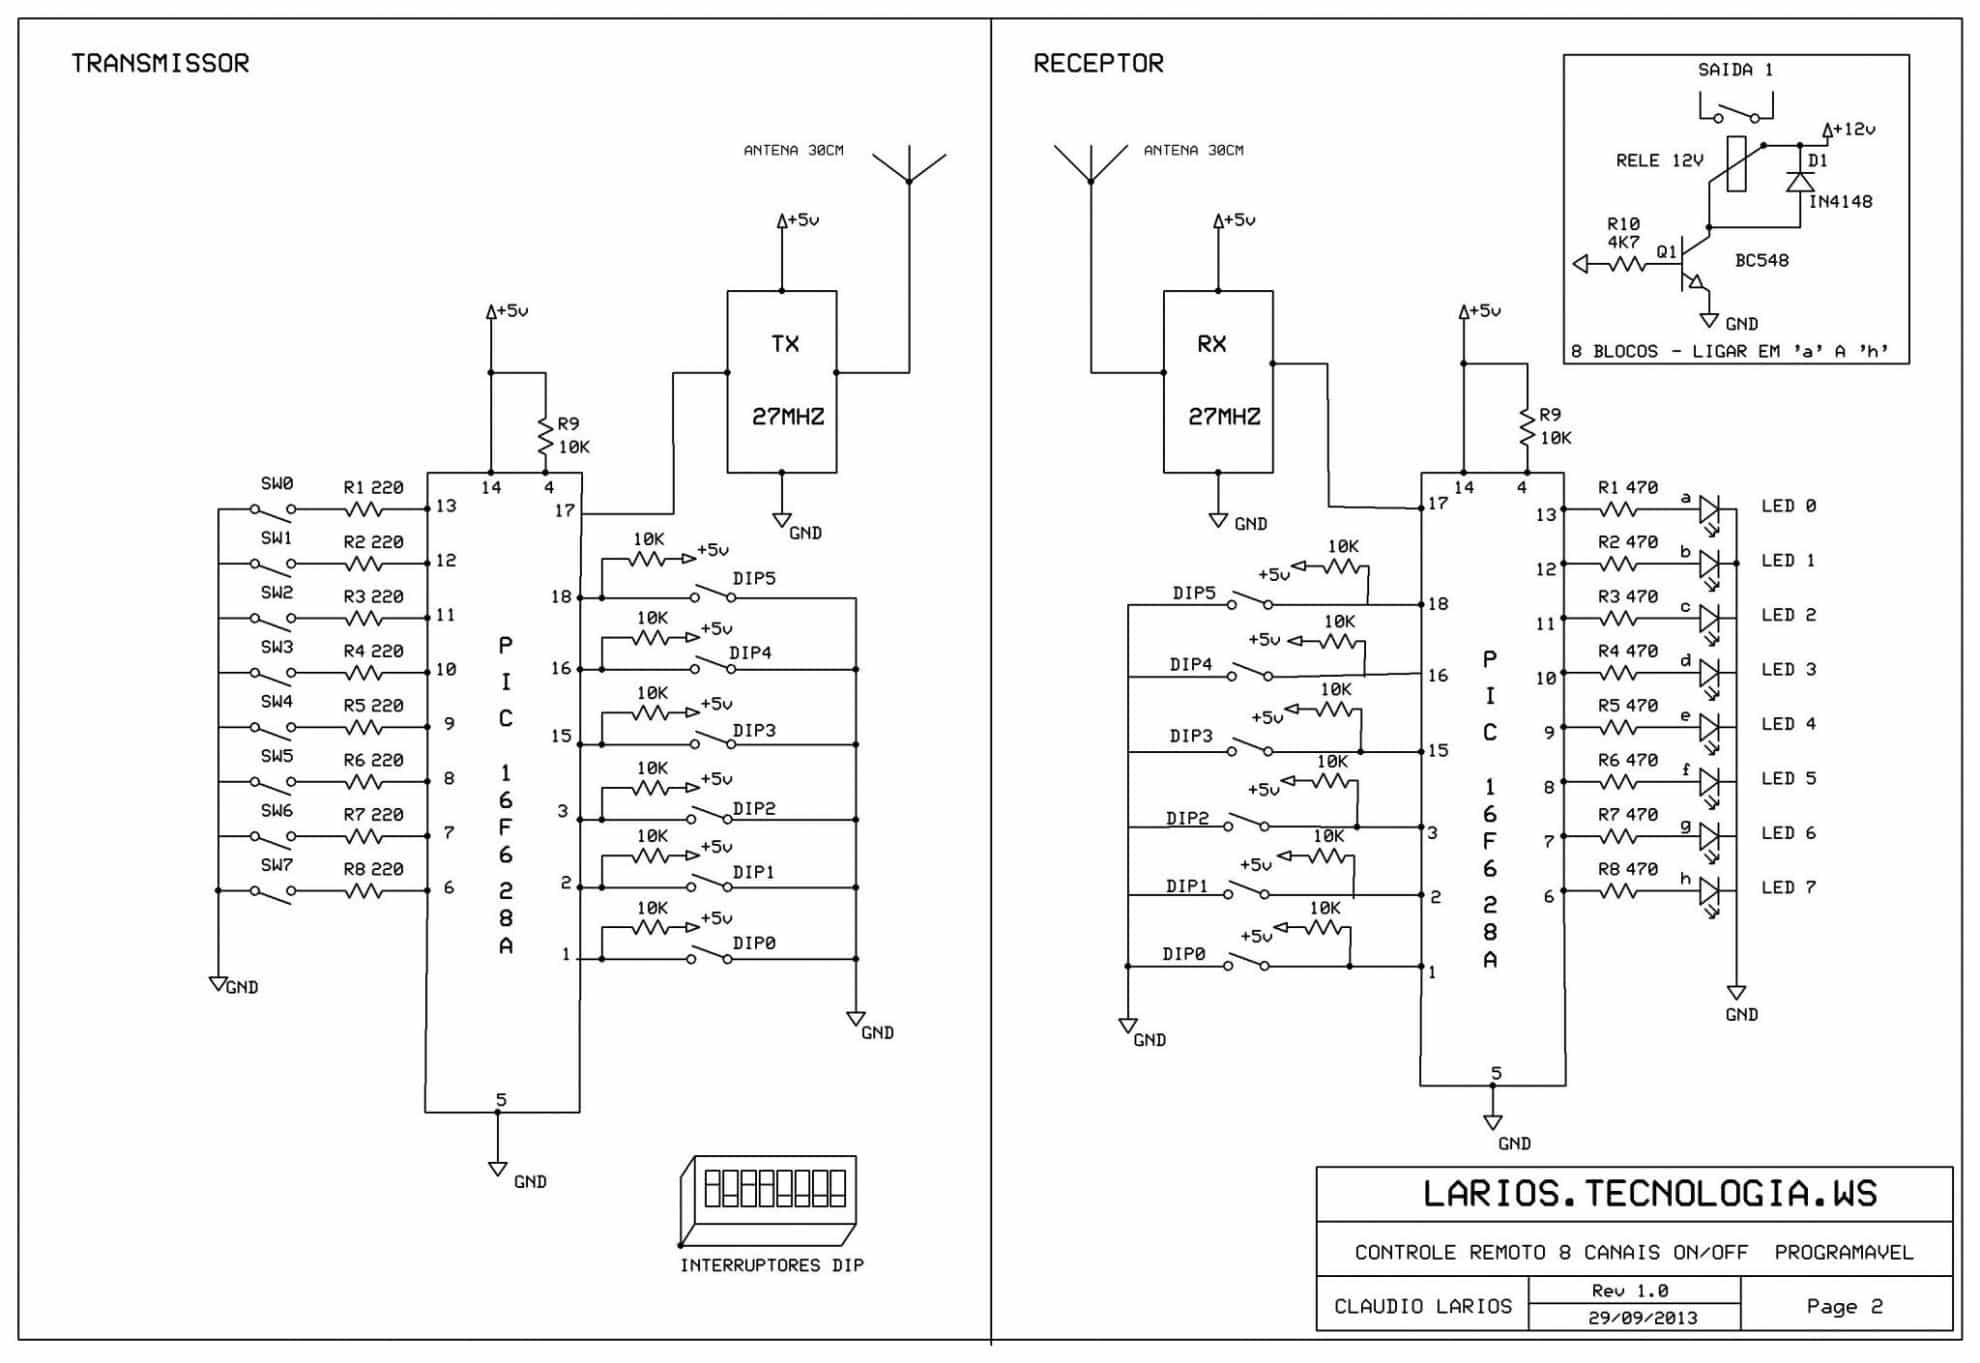 Diagramas de Sistemas de Controle de Elo CC — Manual do Anatem 12.4